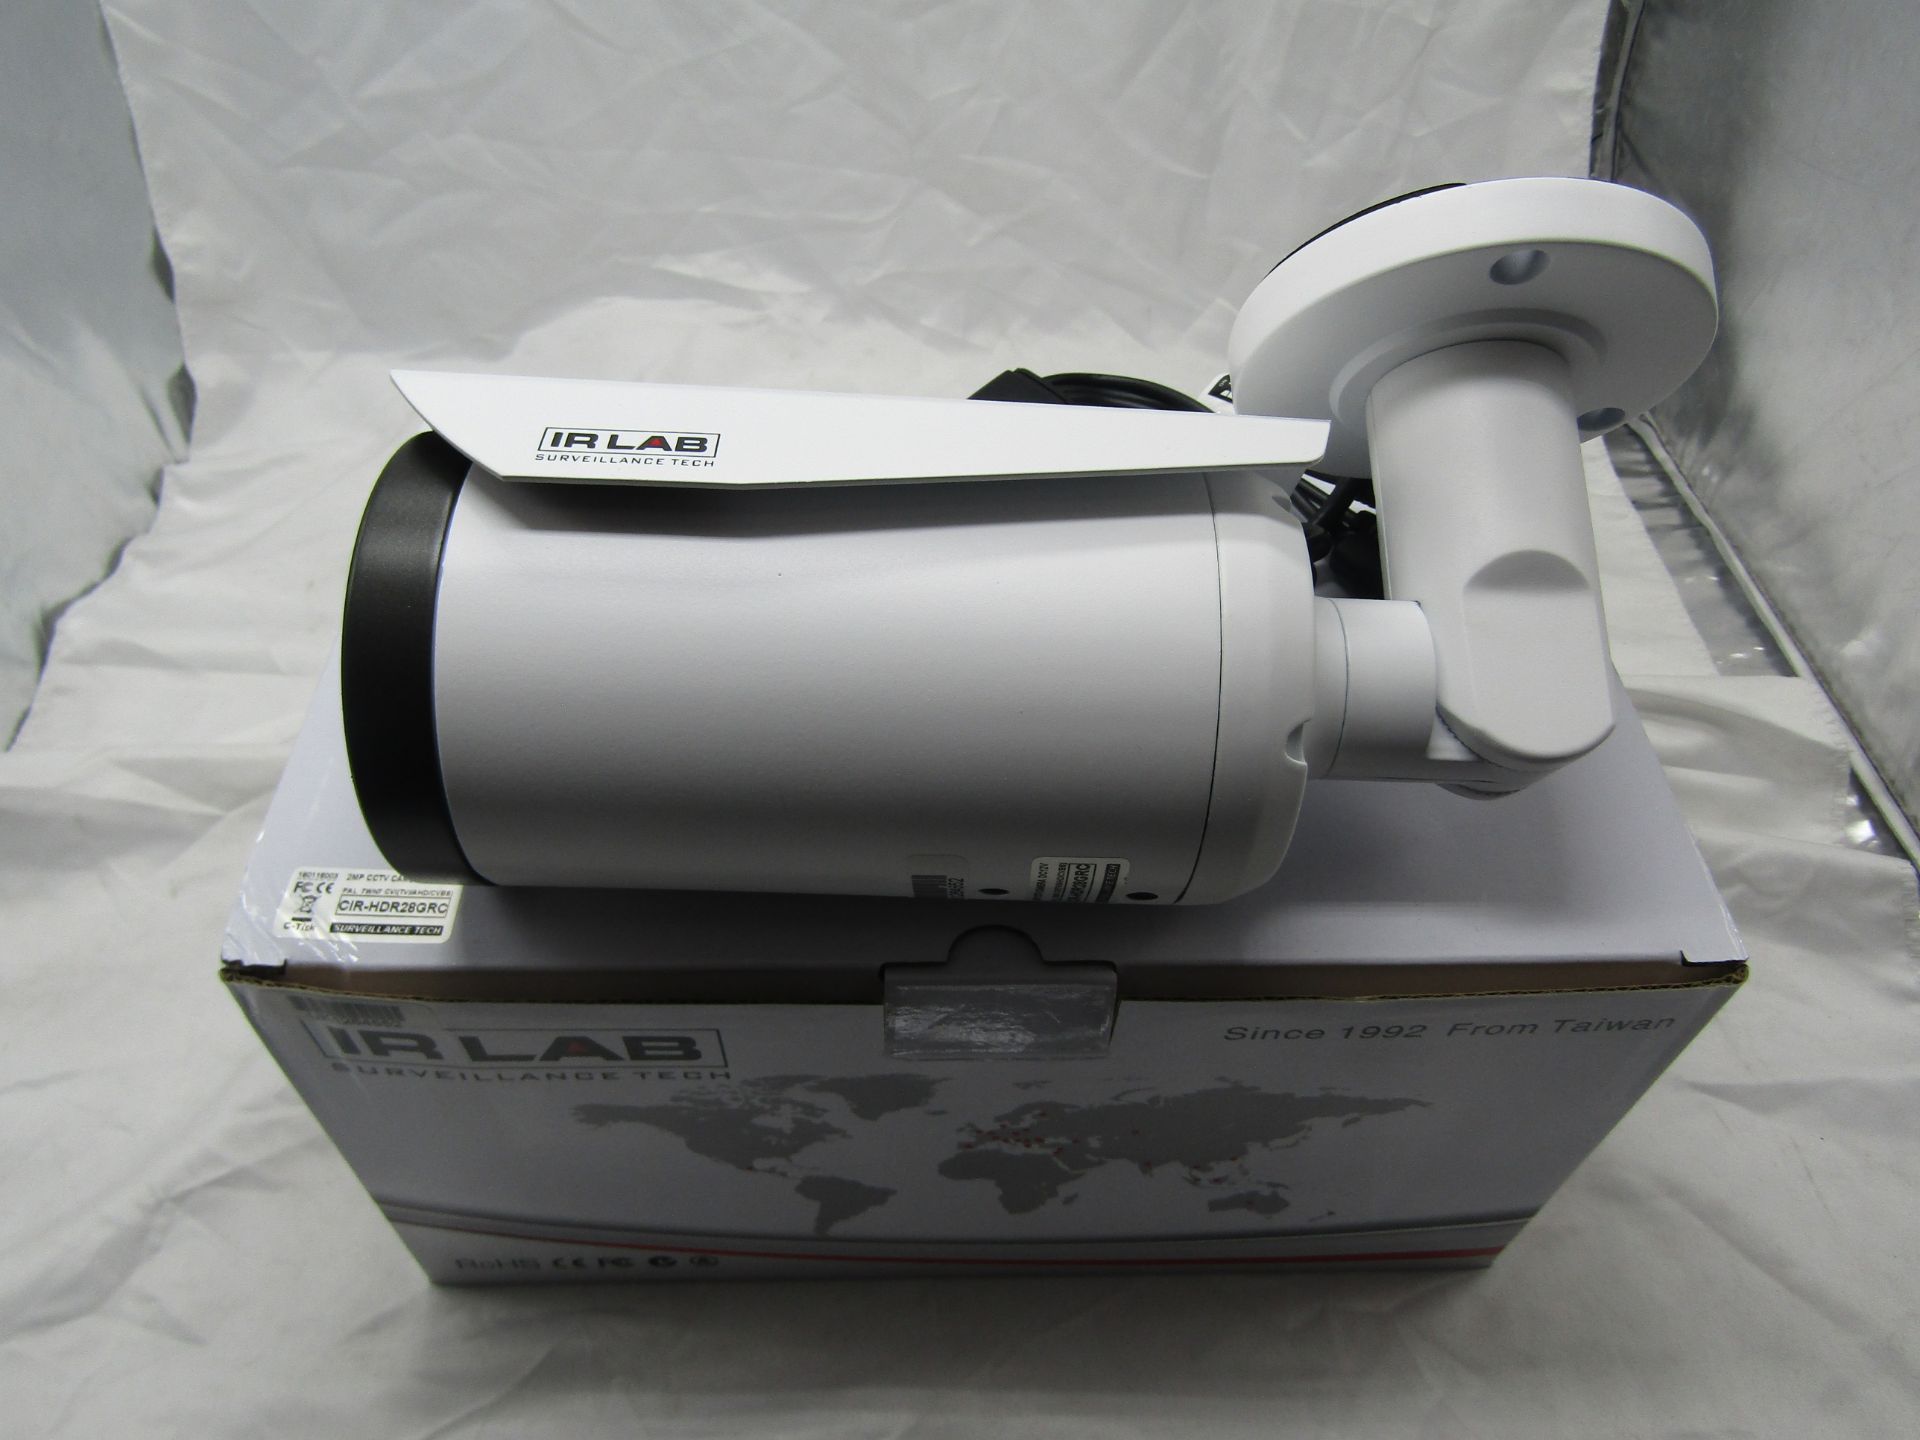 IR LAB 2mp CCTV Camera DC12V. Model: CIR-HDR28GRC - Untested